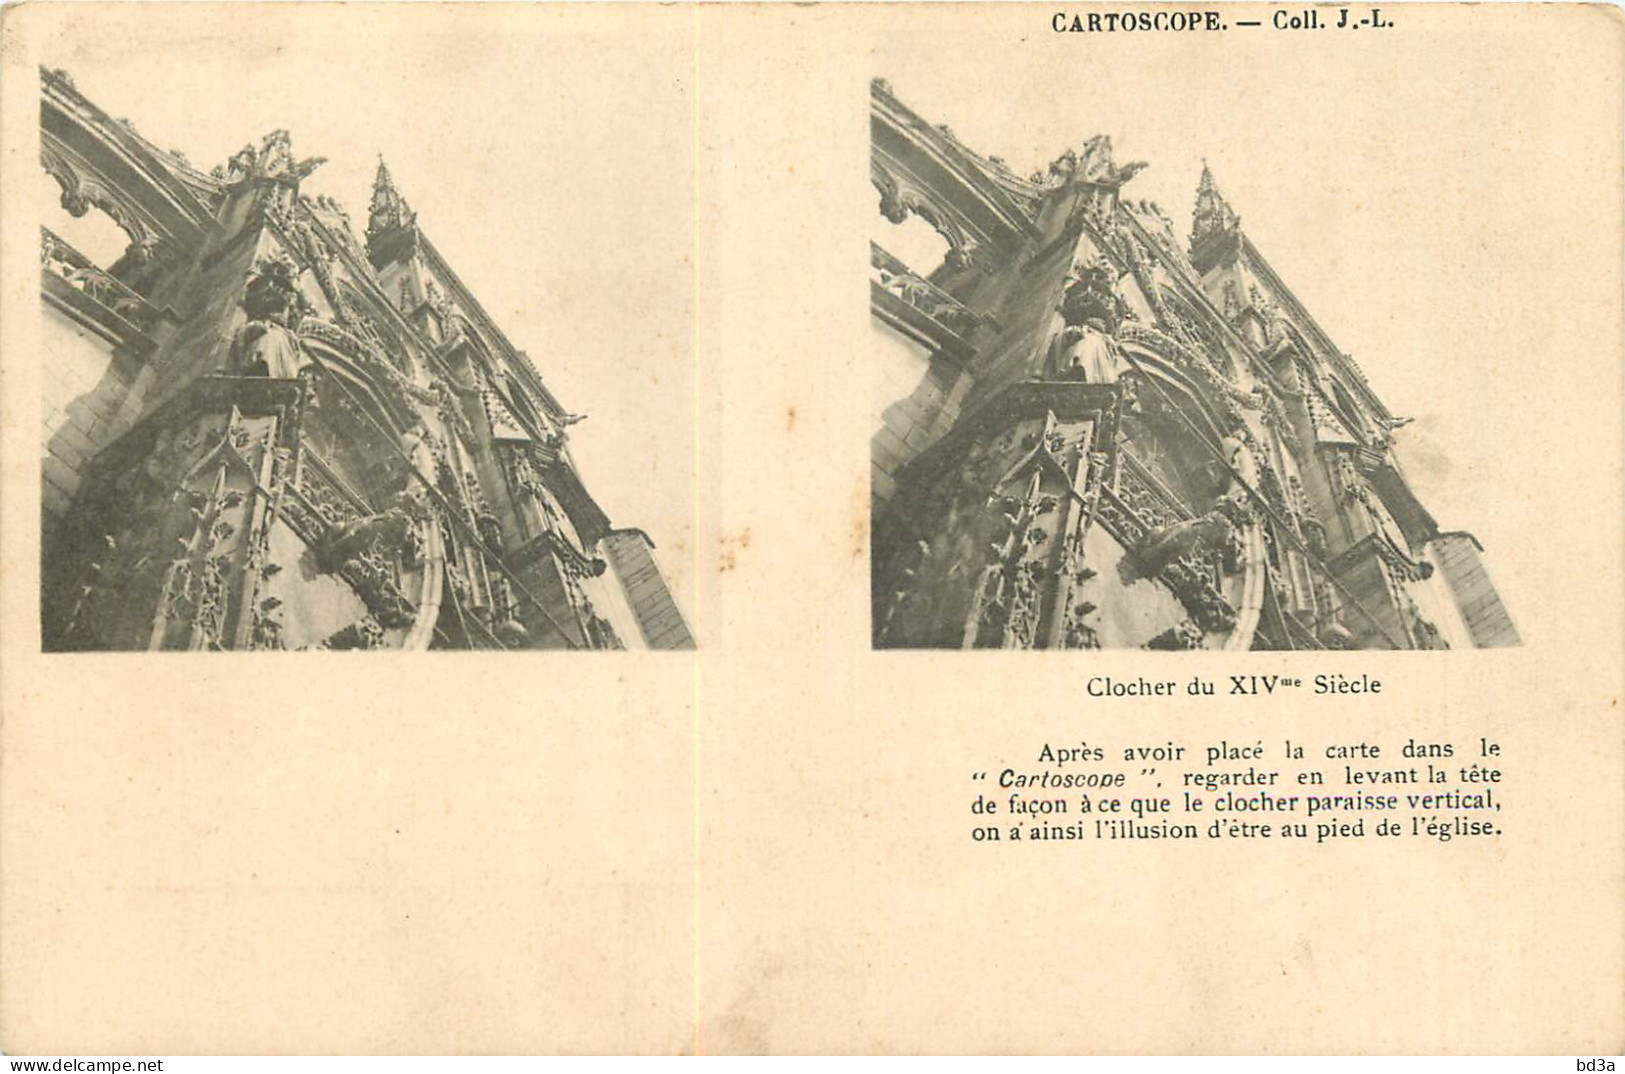 CARTE STEREOSCOPIQUE -  CLOCHER DU XIVème SIECLE  - CARTOSCOPE - COLL J.L. - Cartoline Stereoscopiche